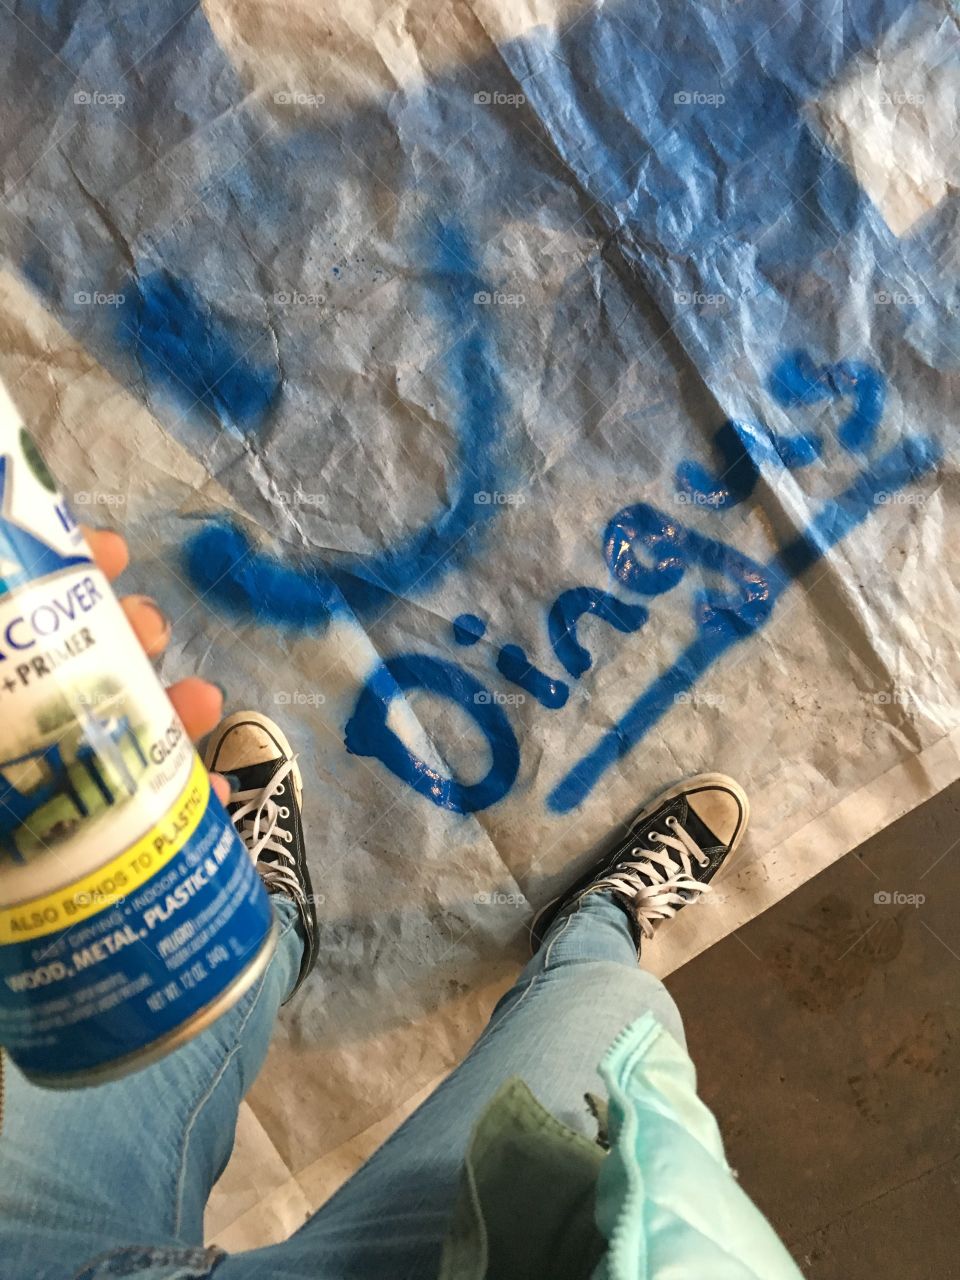 Spray paint 😂